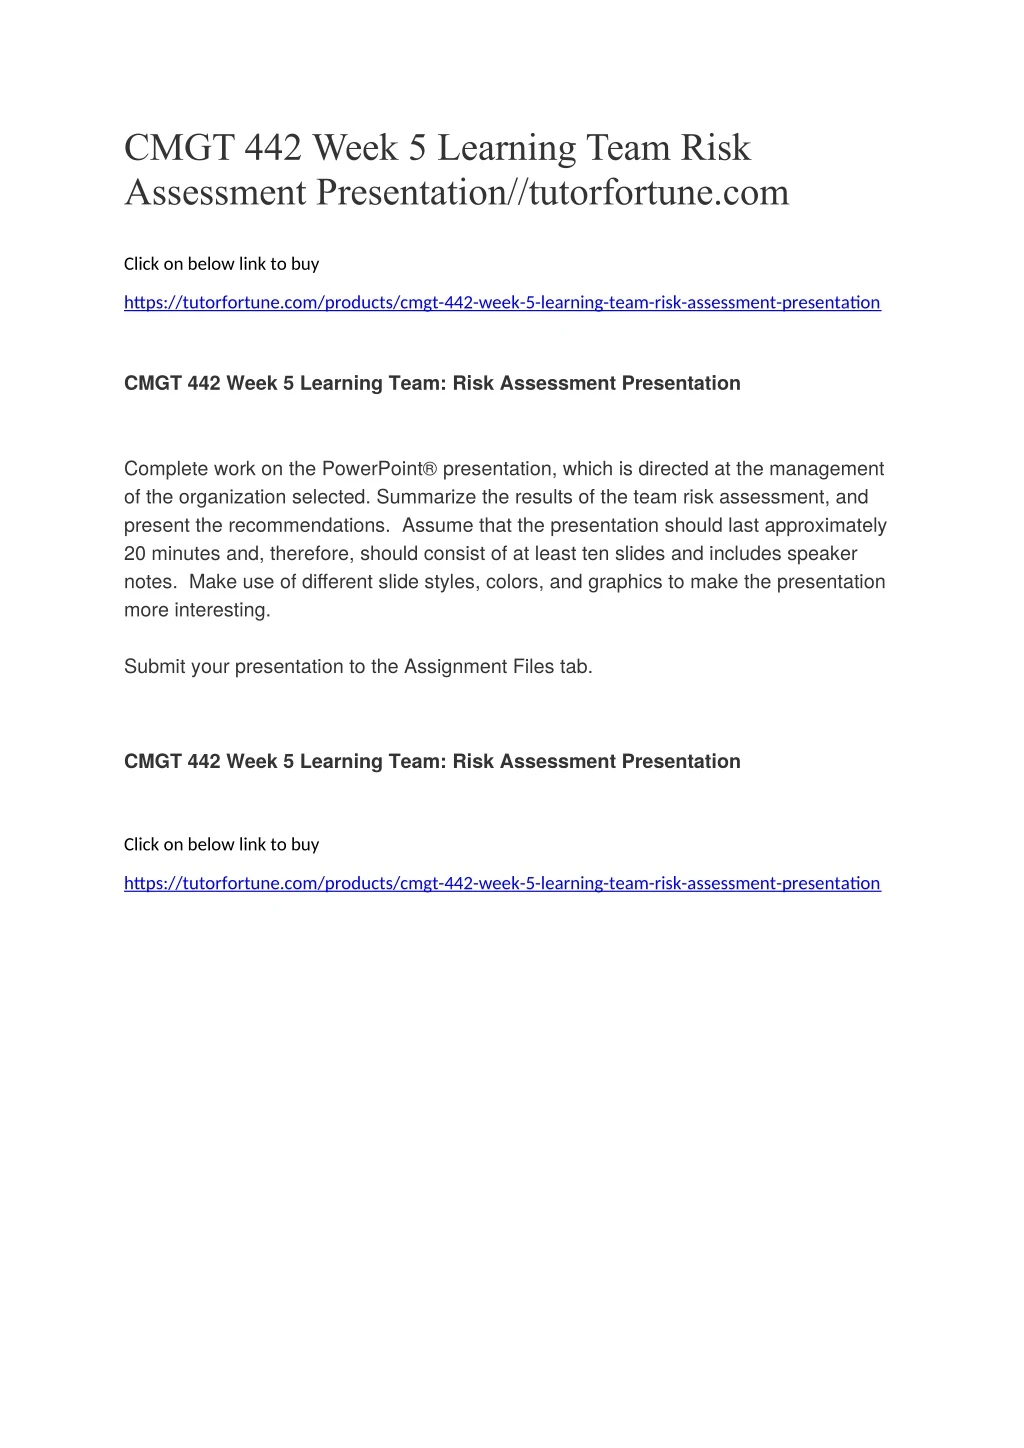 cmgt 442 week 5 learning team risk assessment